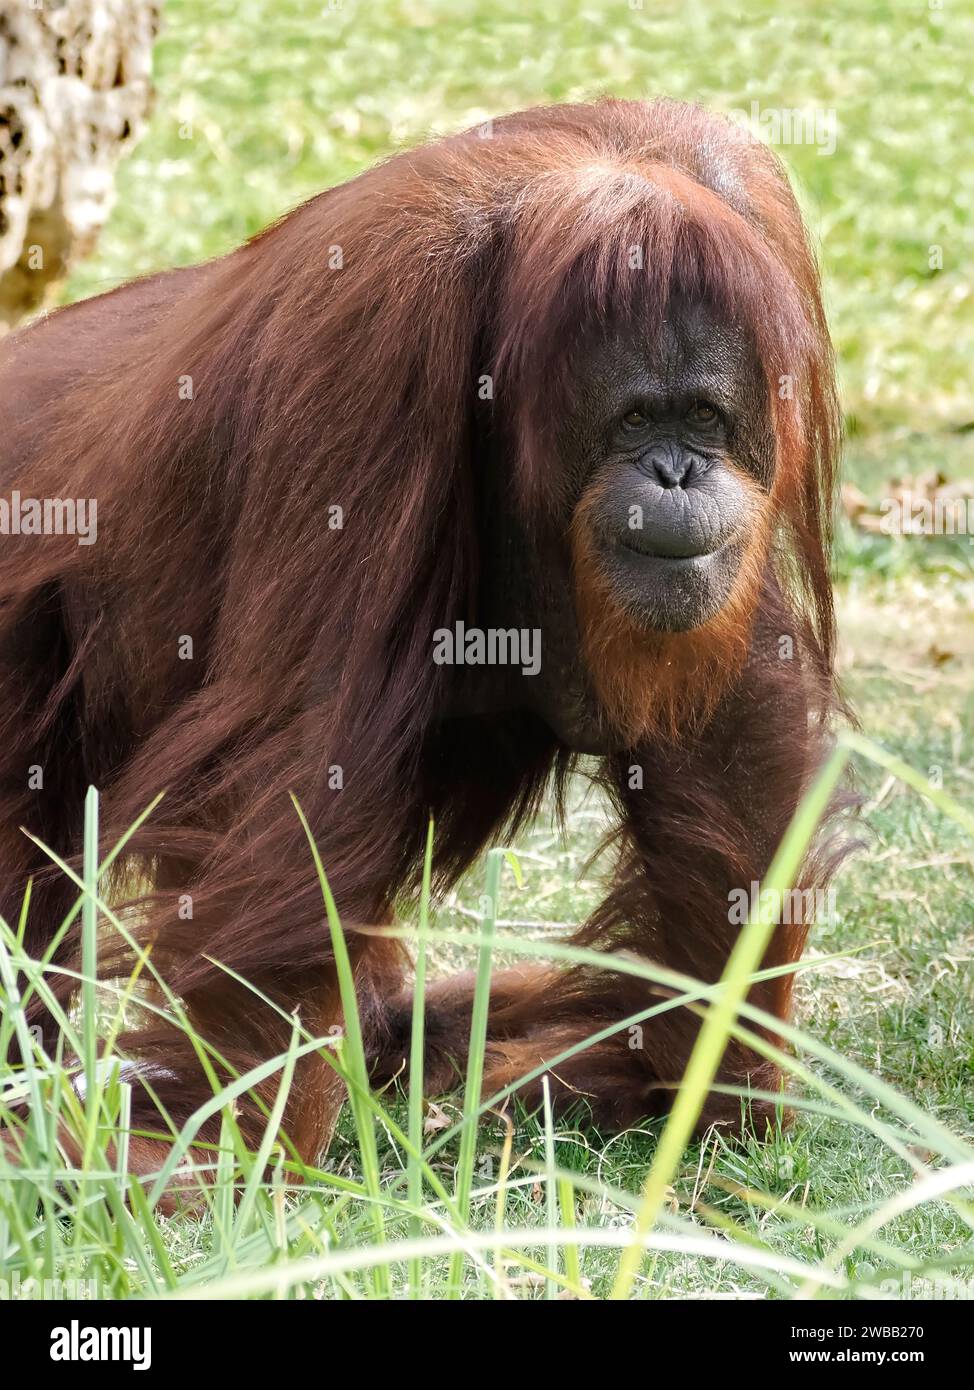 Closeup orangutan (Pongo pygmaeus) in tall grass and seen from front Stock Photo